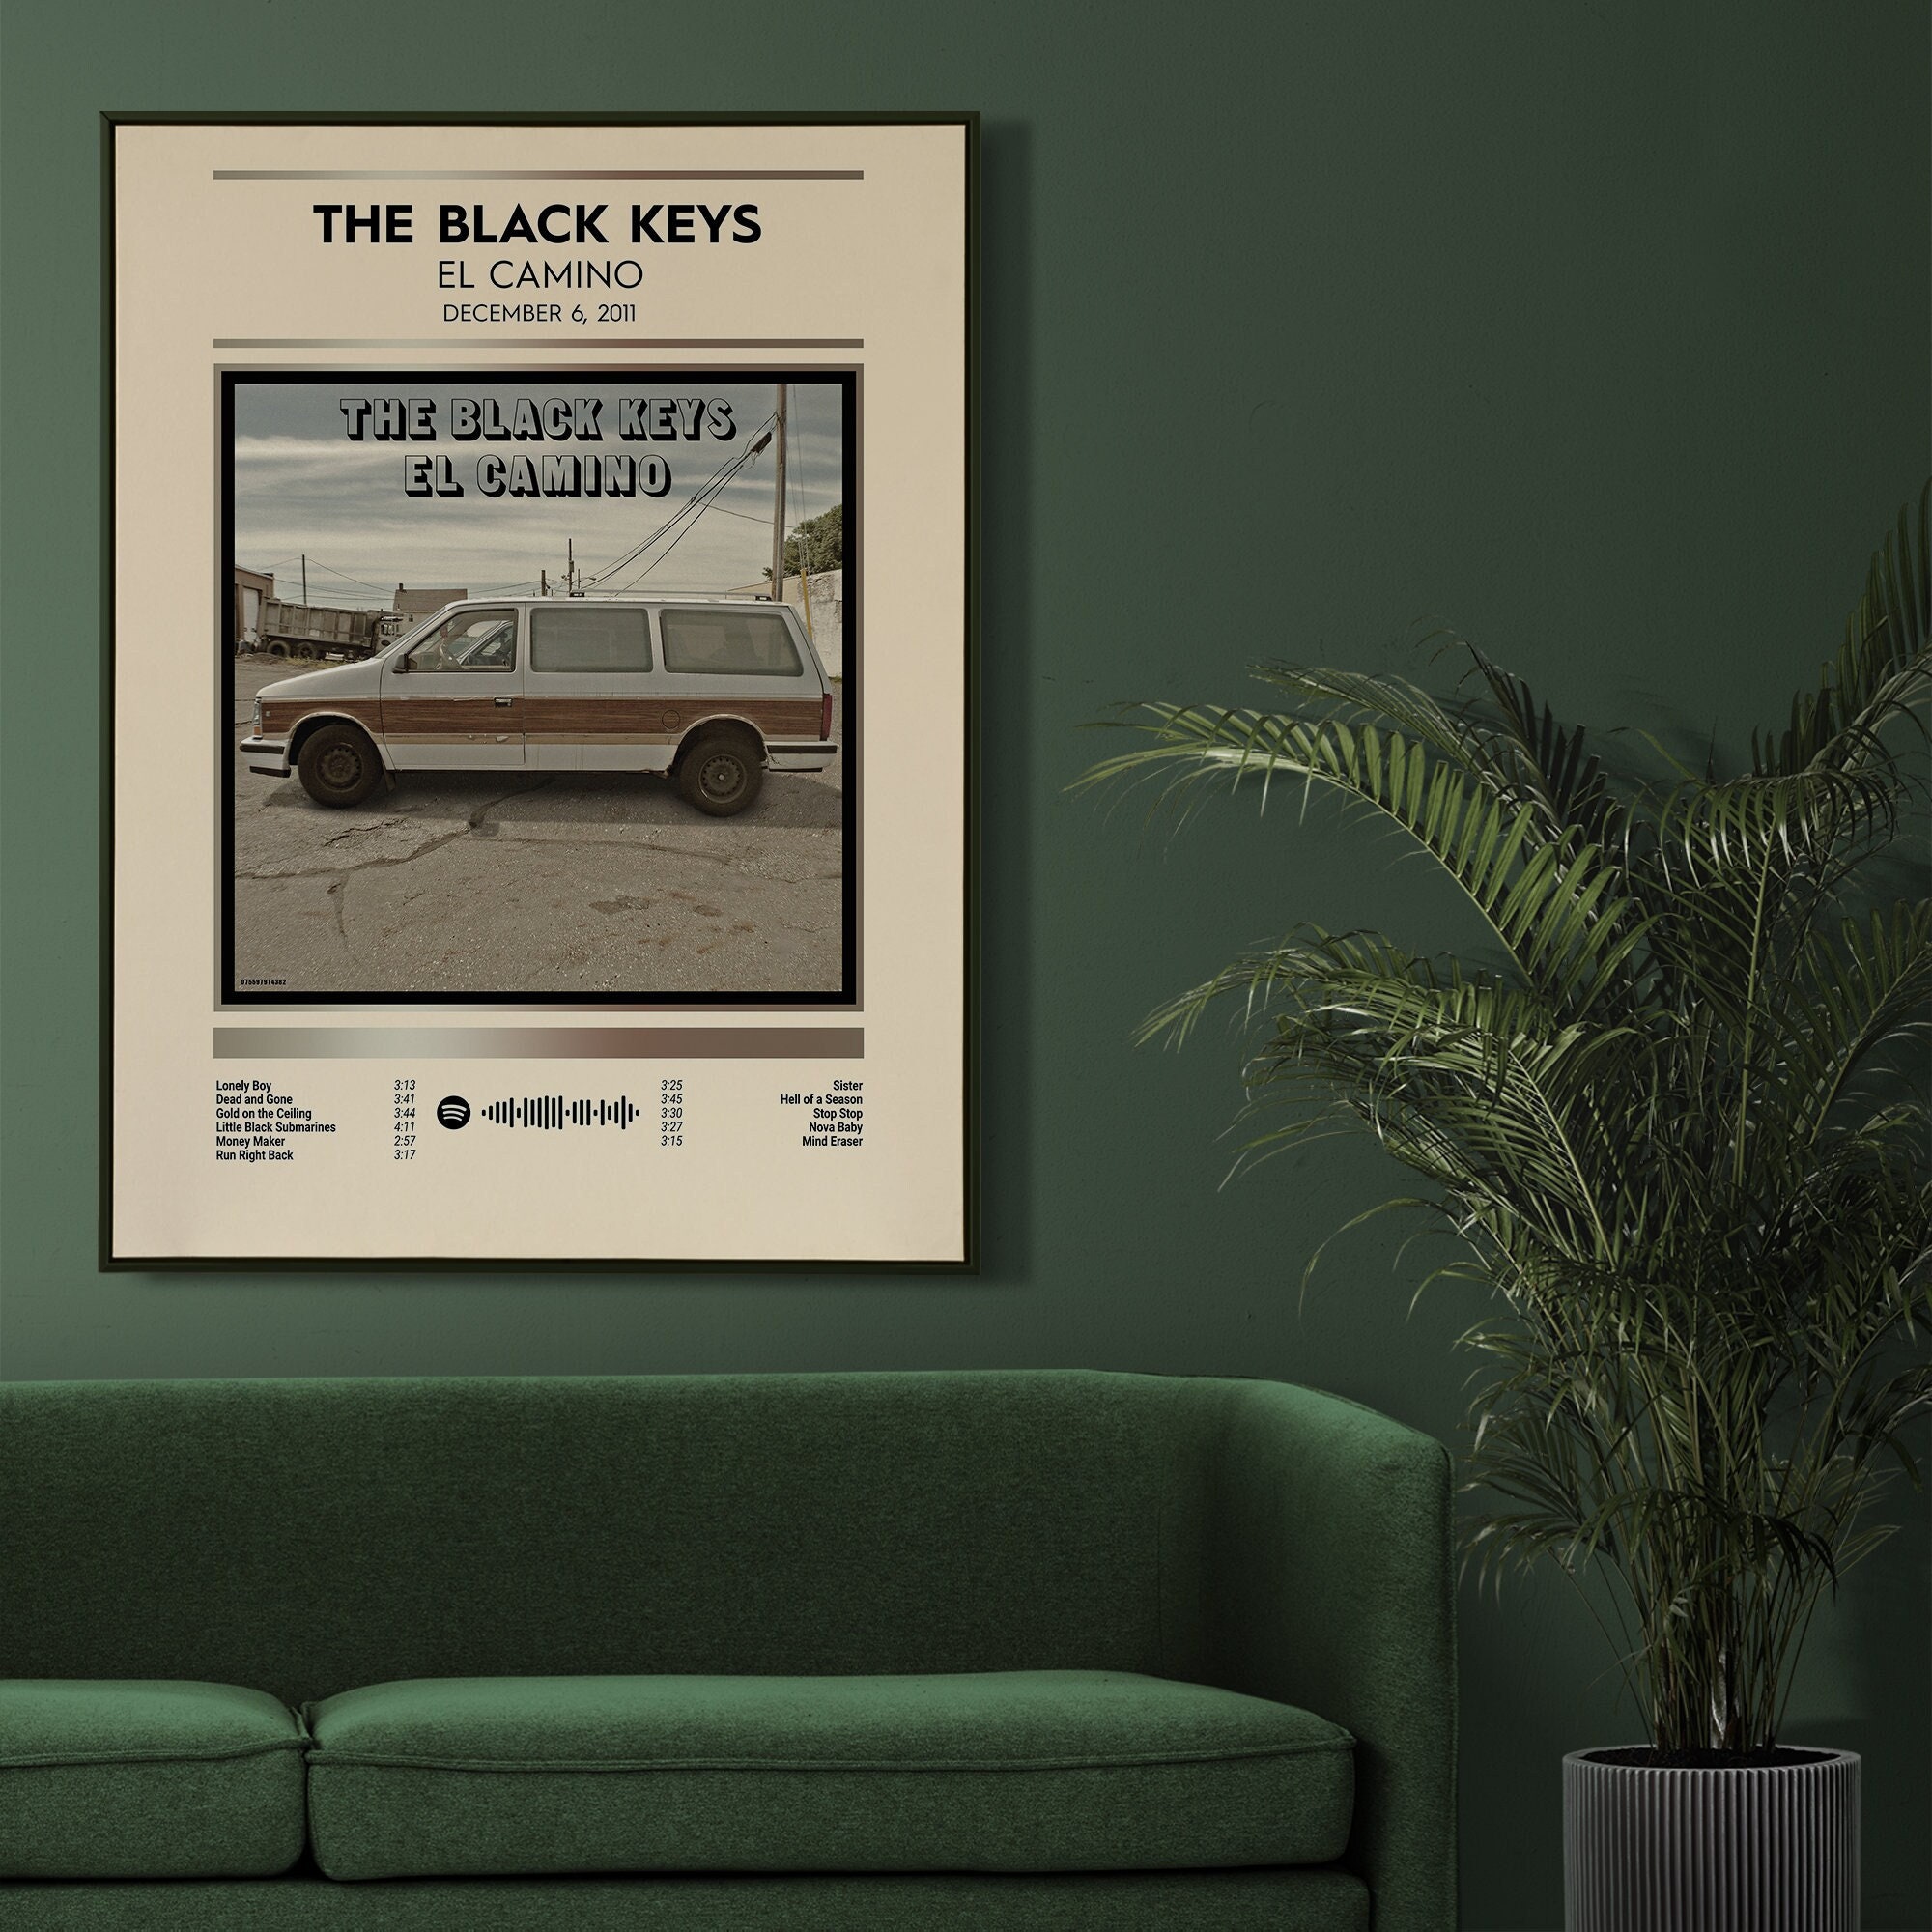 The Black Keys Poster El Camino Poster The Black Keys Album Cover Prints  sold by Elizabeth Hall, SKU 40148395